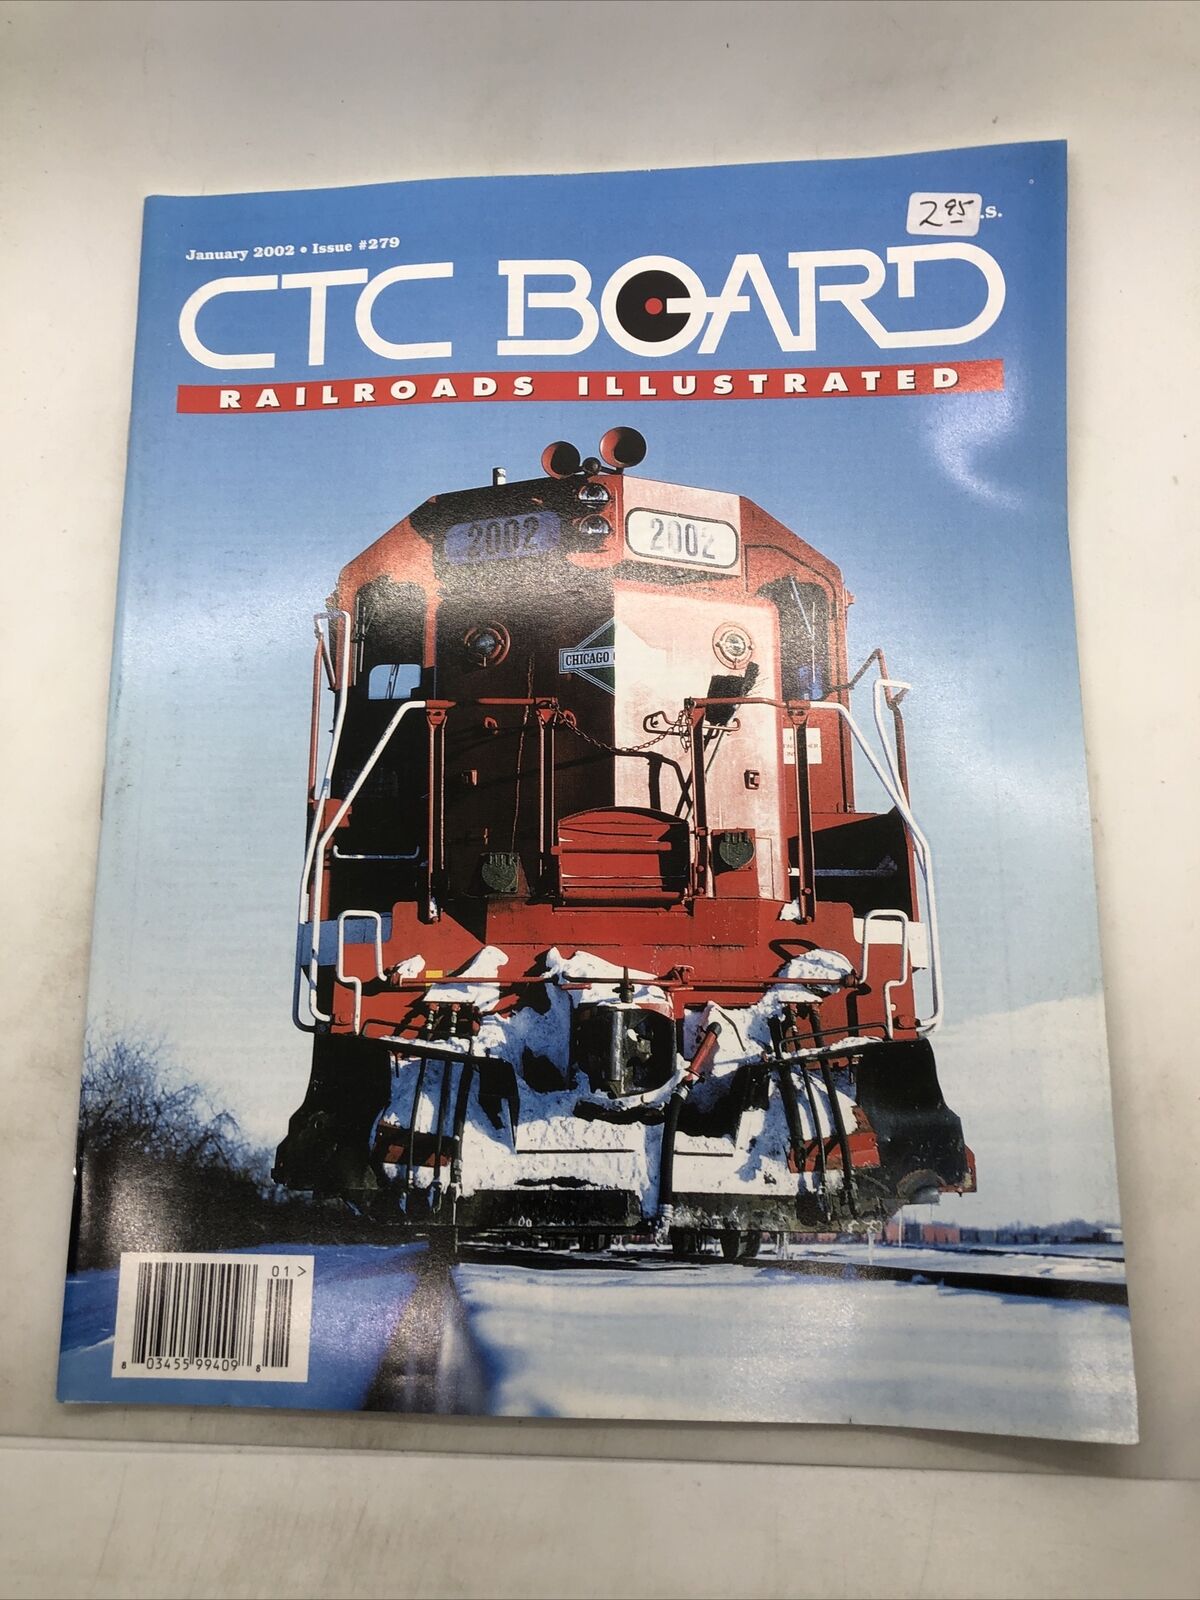 CTC Board Railroad Illustrated Magazine - January 2002